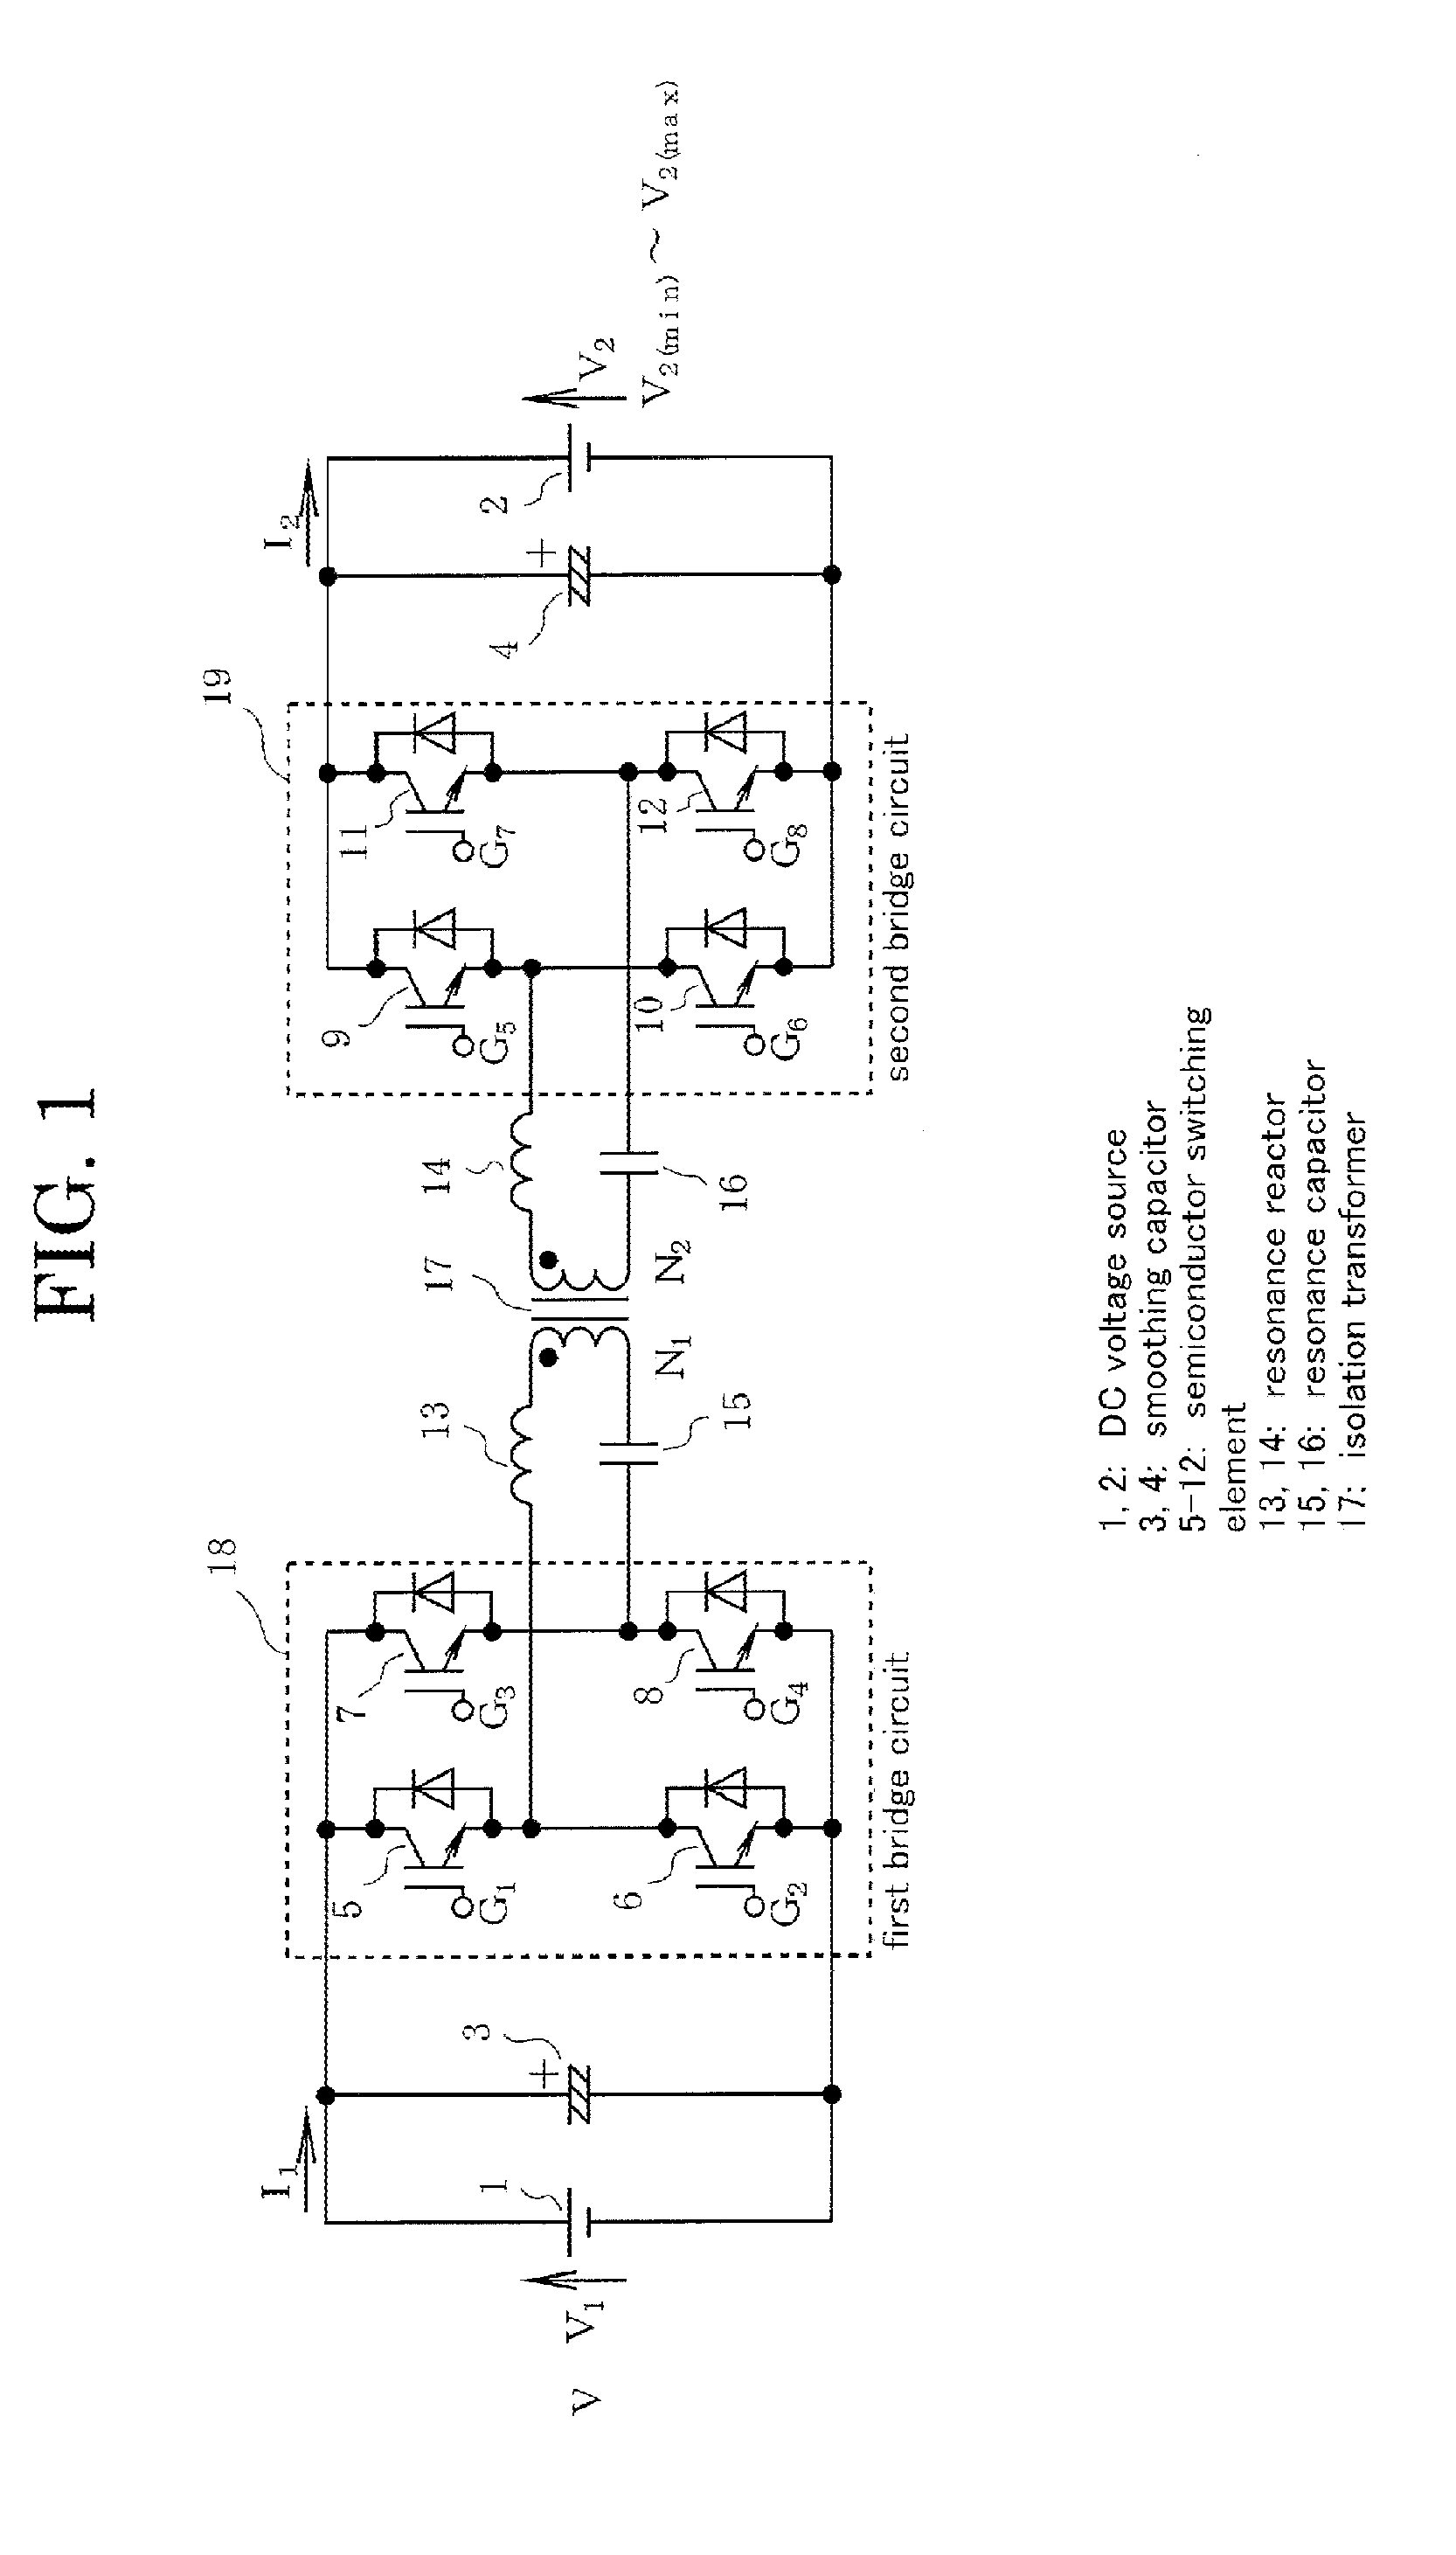 Bi-directional dc/dc converter